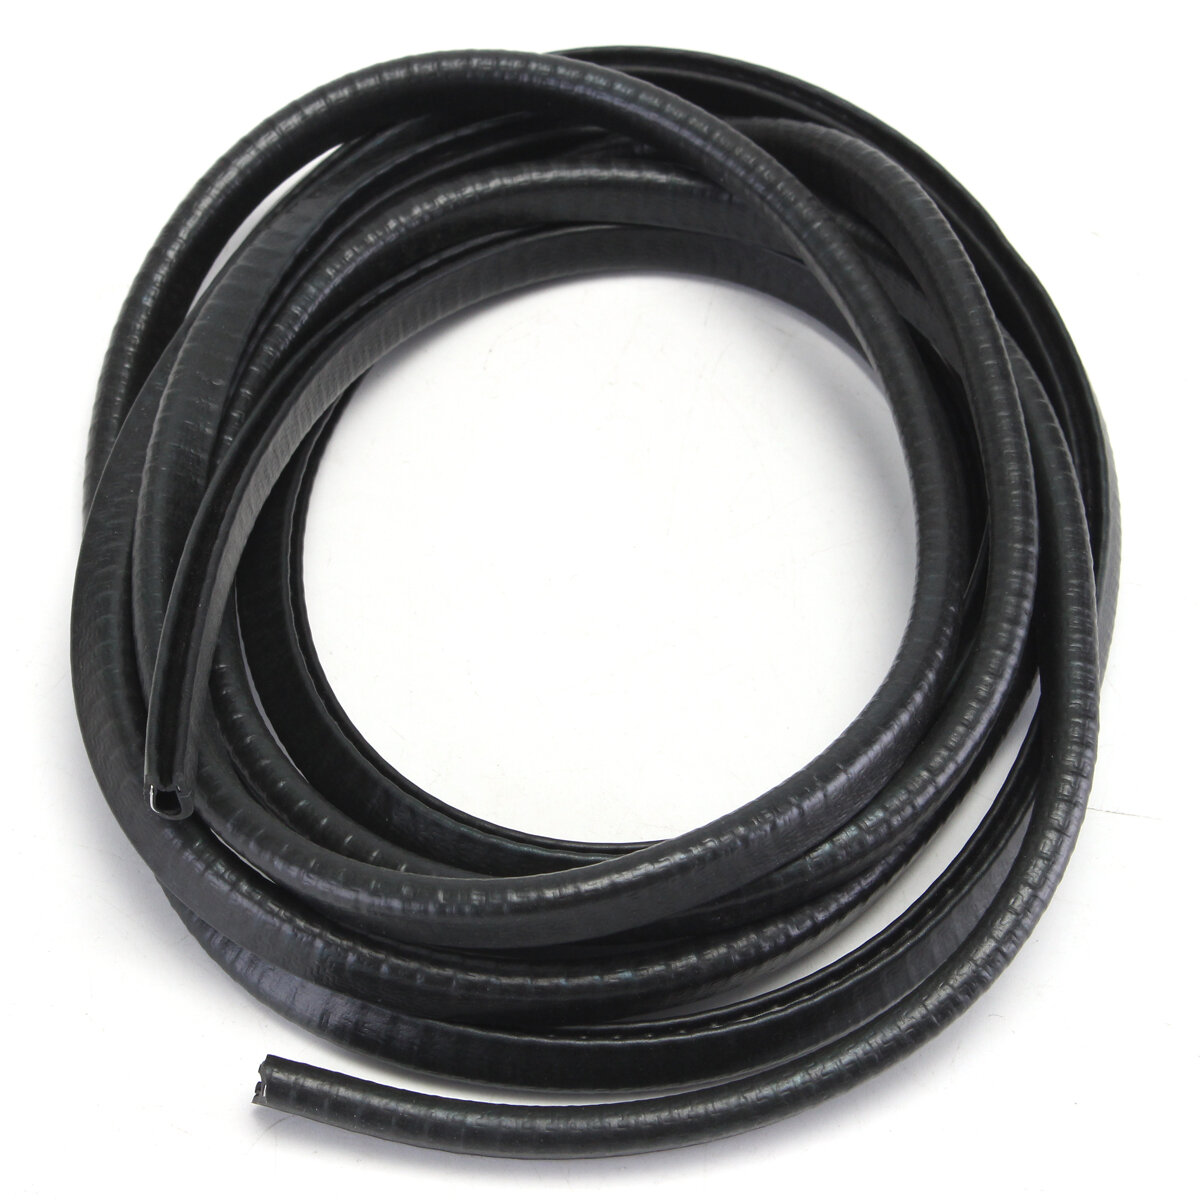 3m Long Rubber Seal Ring Strip Edge Protector Anti-scratch U Type for Door Window